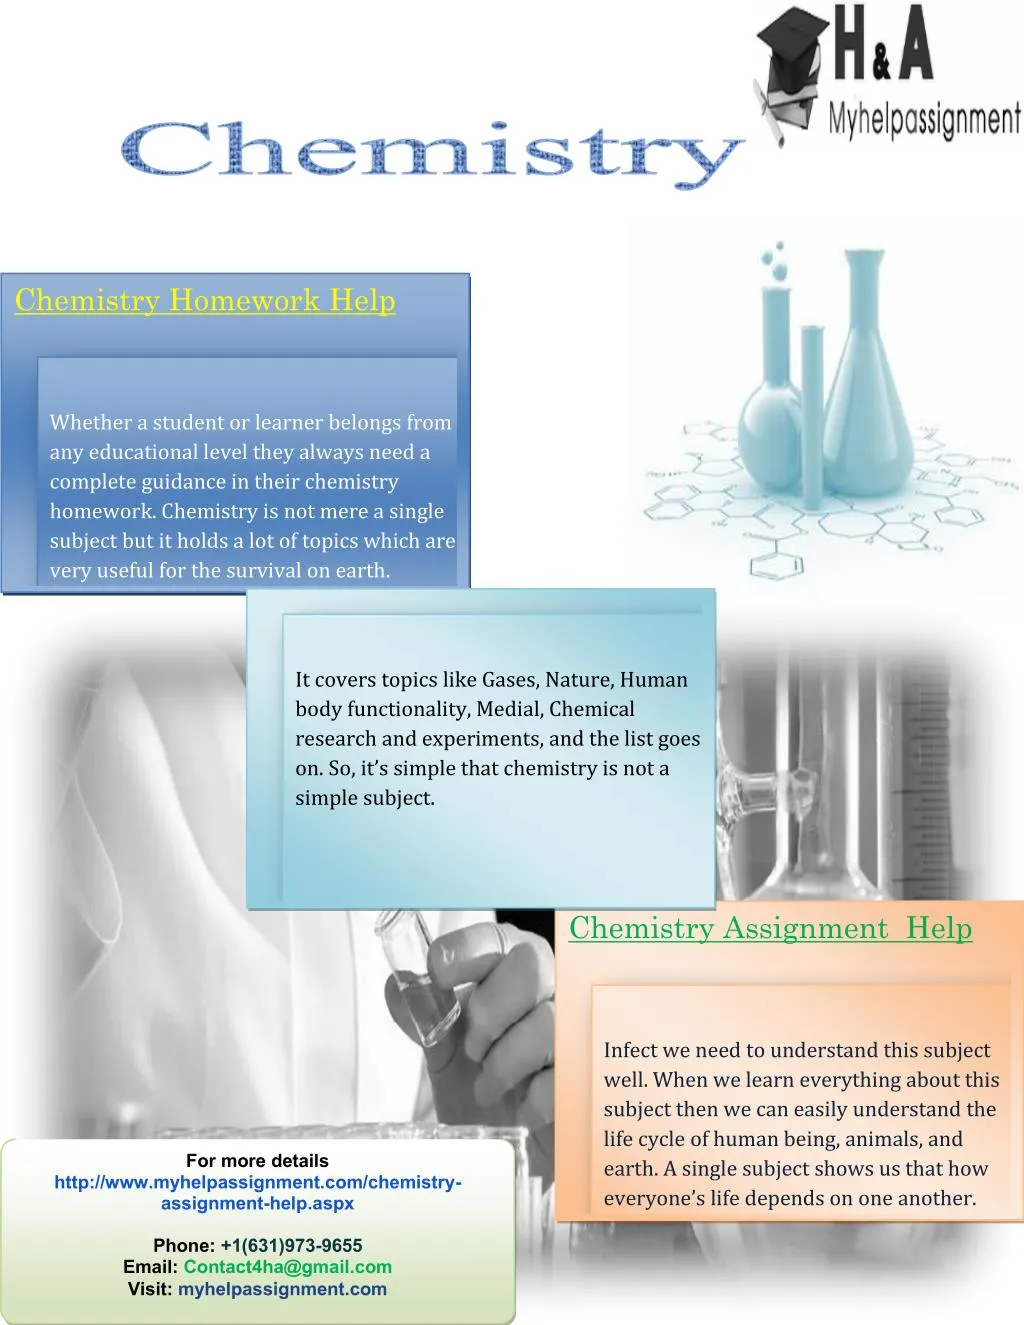 Chemistry homework help